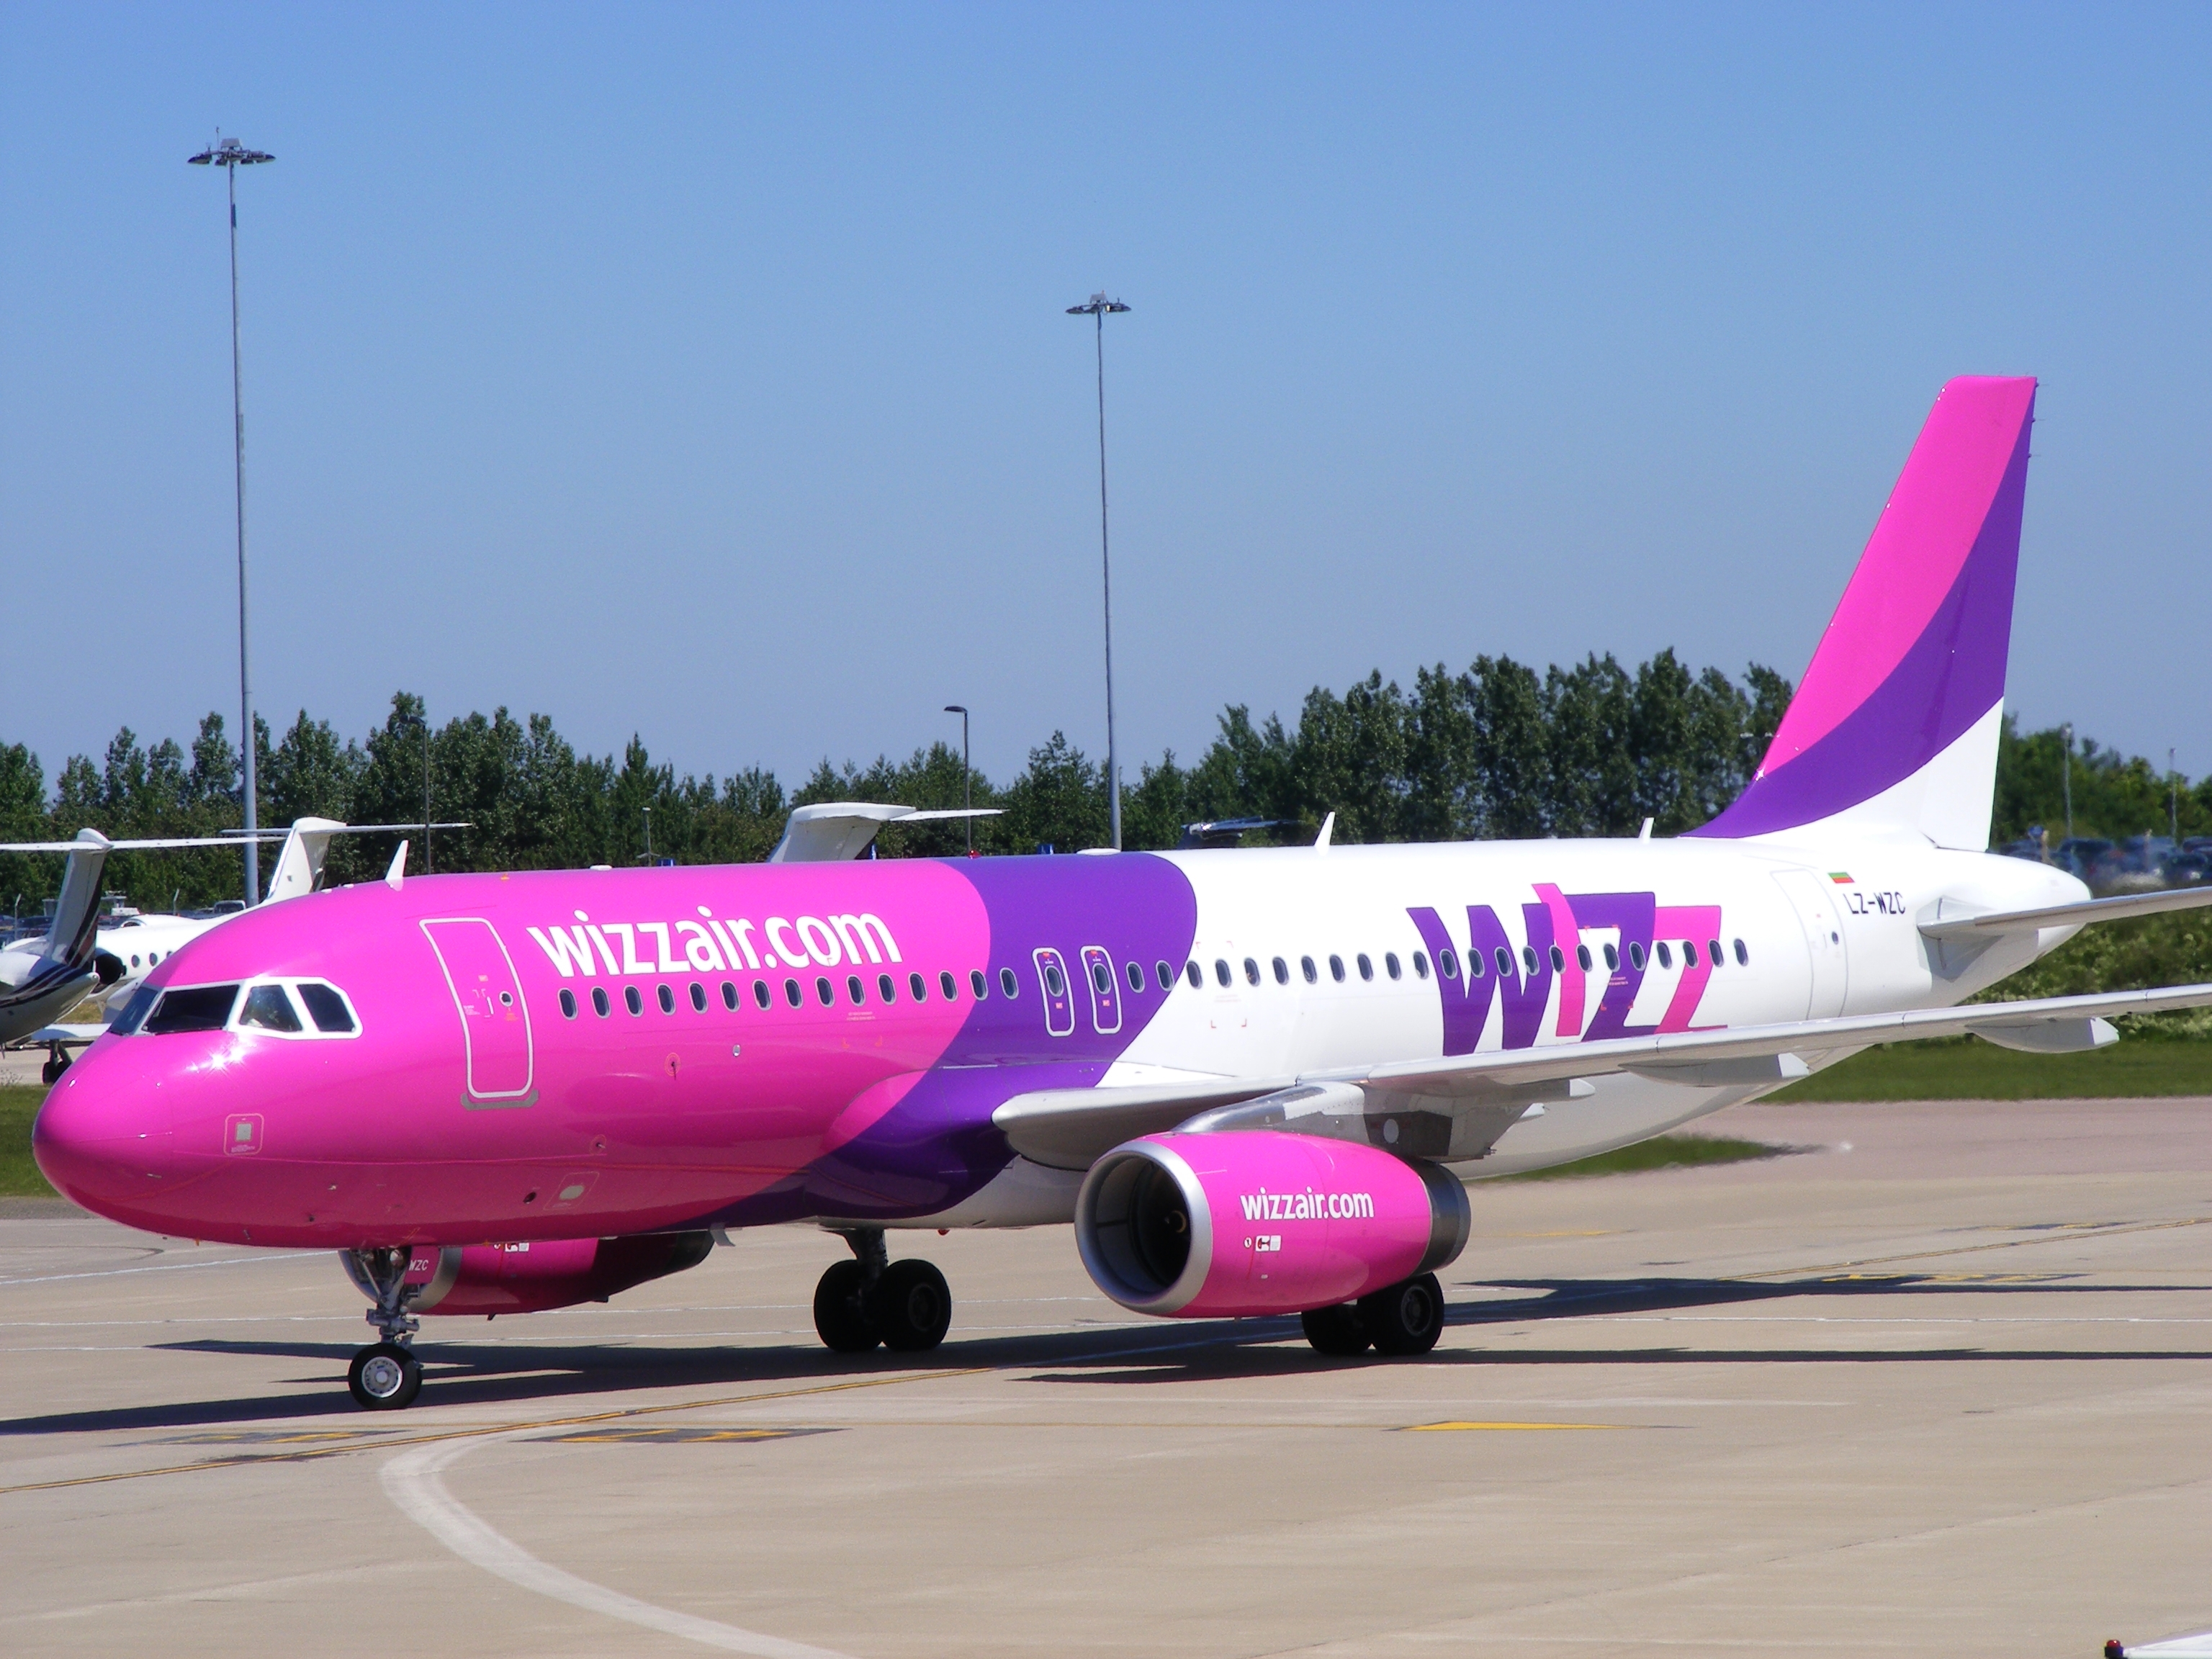 W iz. Wizz Air самолеты. Венгерская авиакомпания Wizzair. Wizz Air a320. Wizz Air a330f.